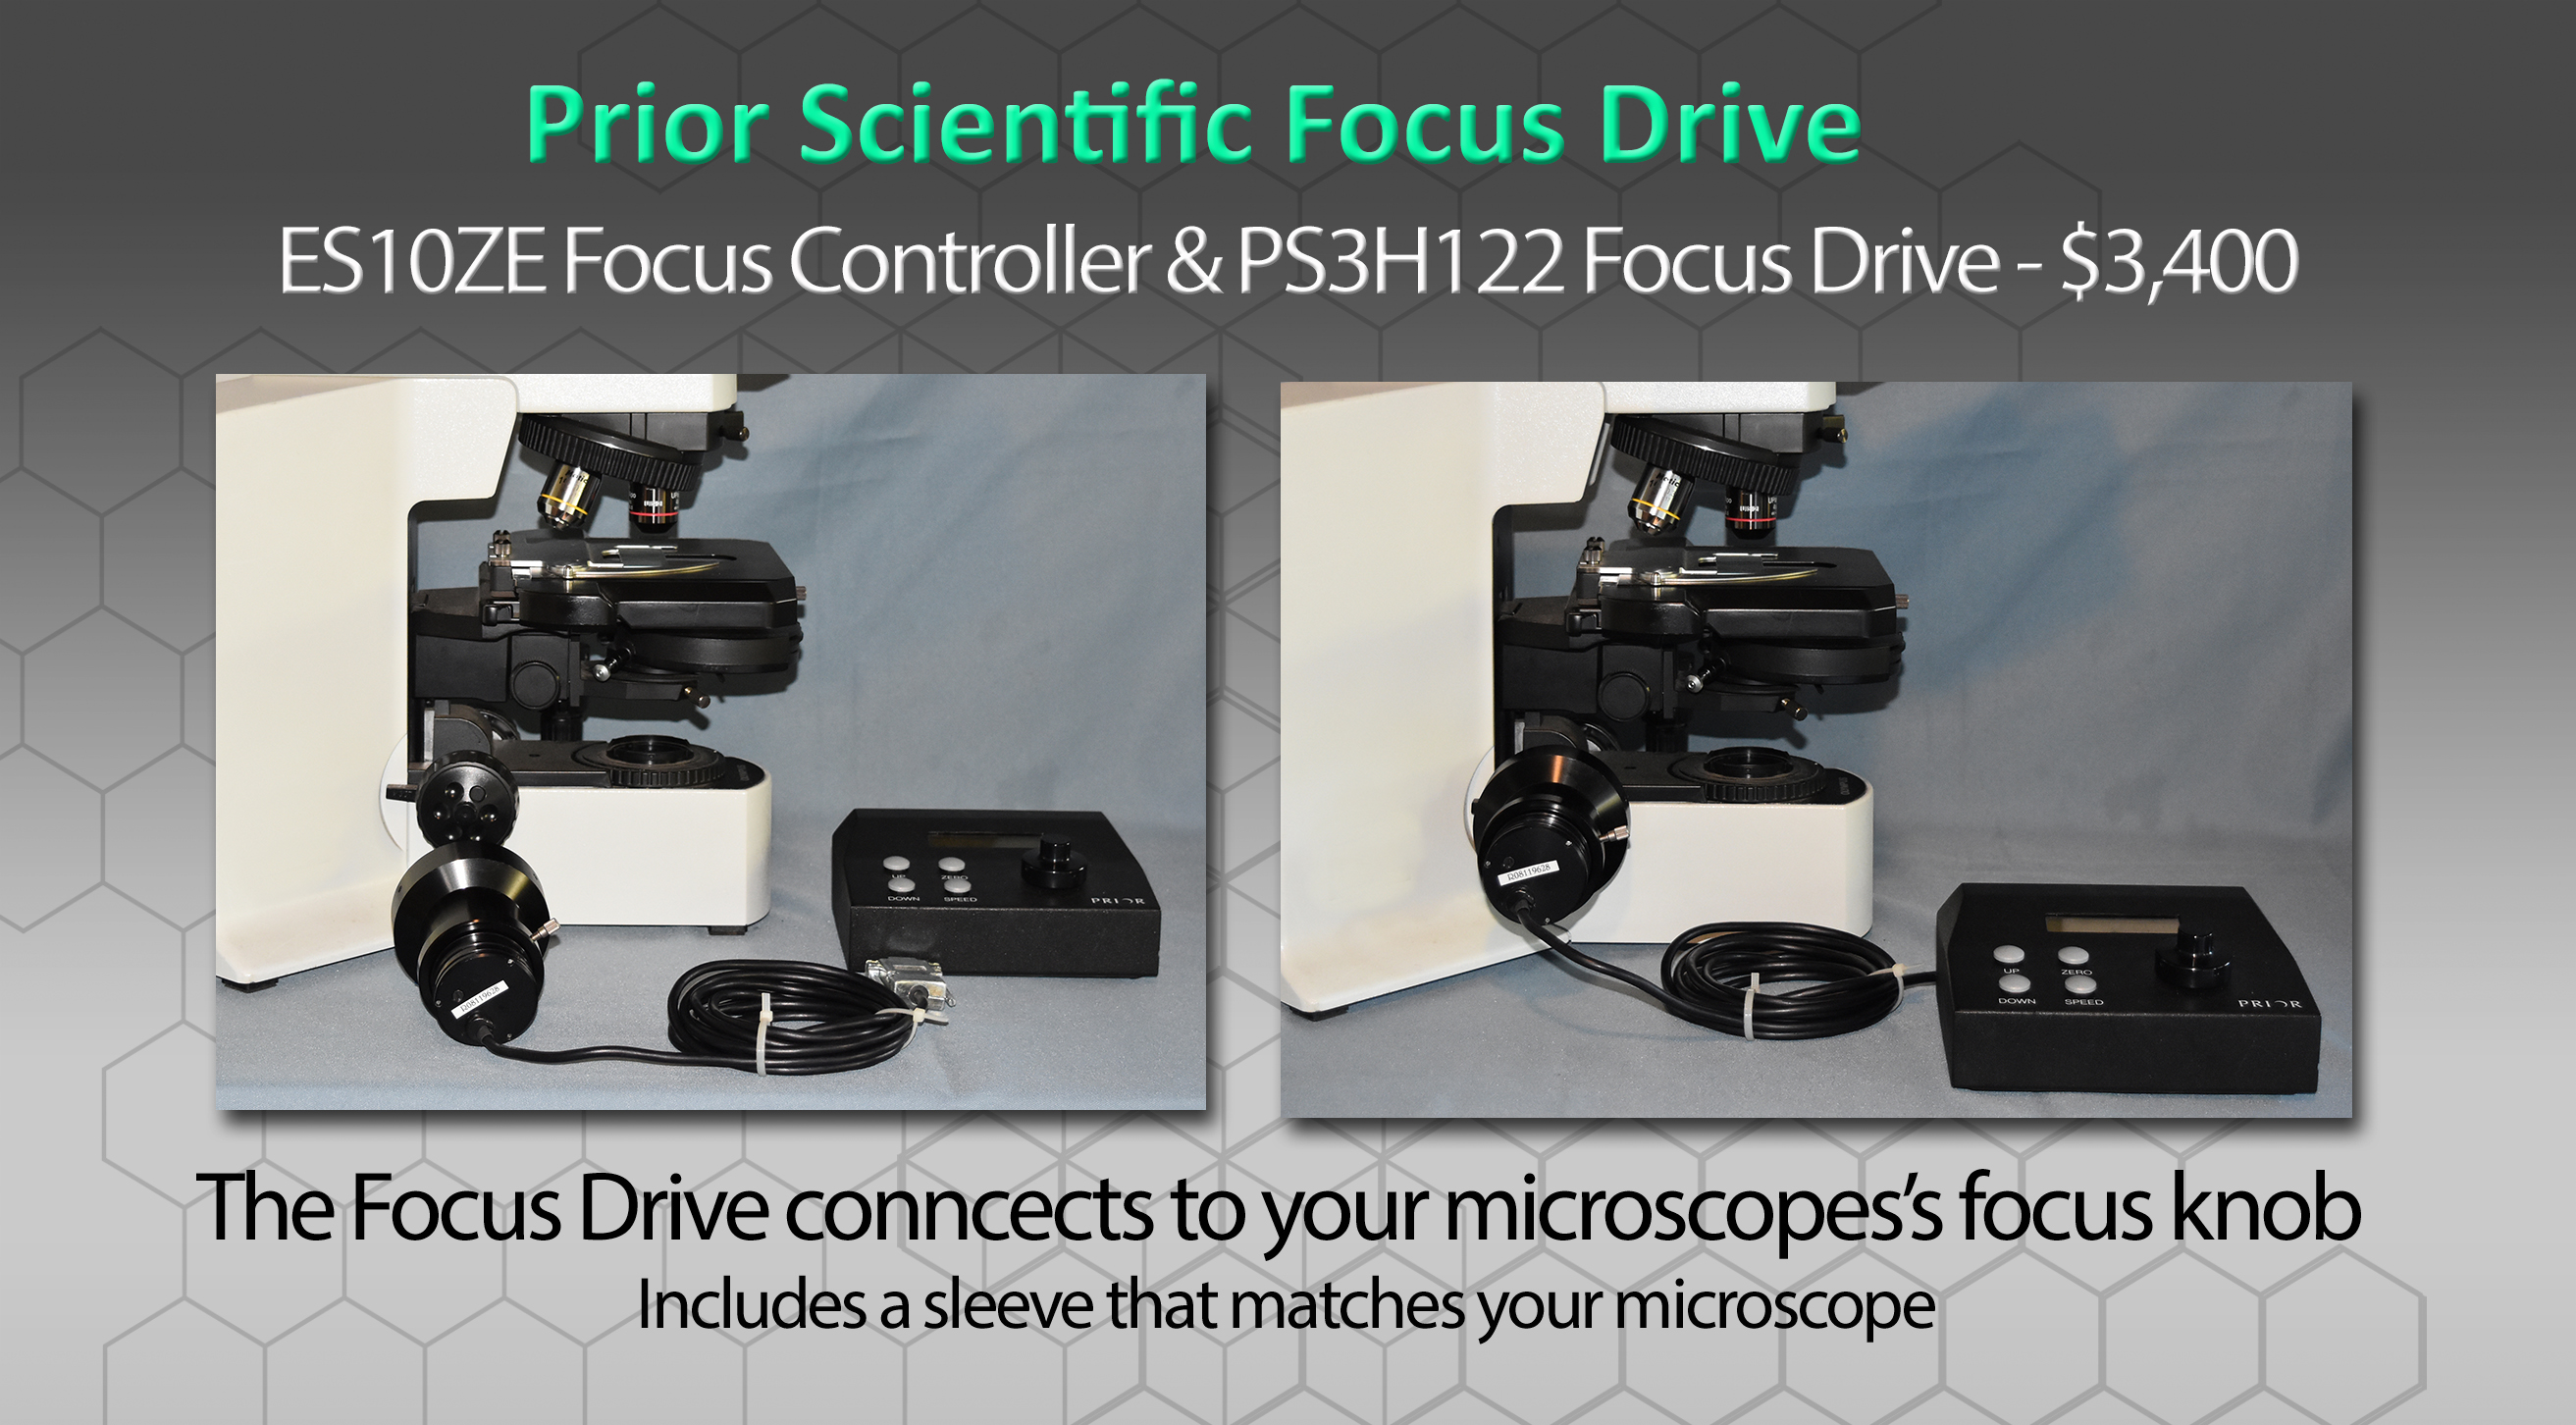 Edge-3d-microscope-Product-Focus-Drive-2020